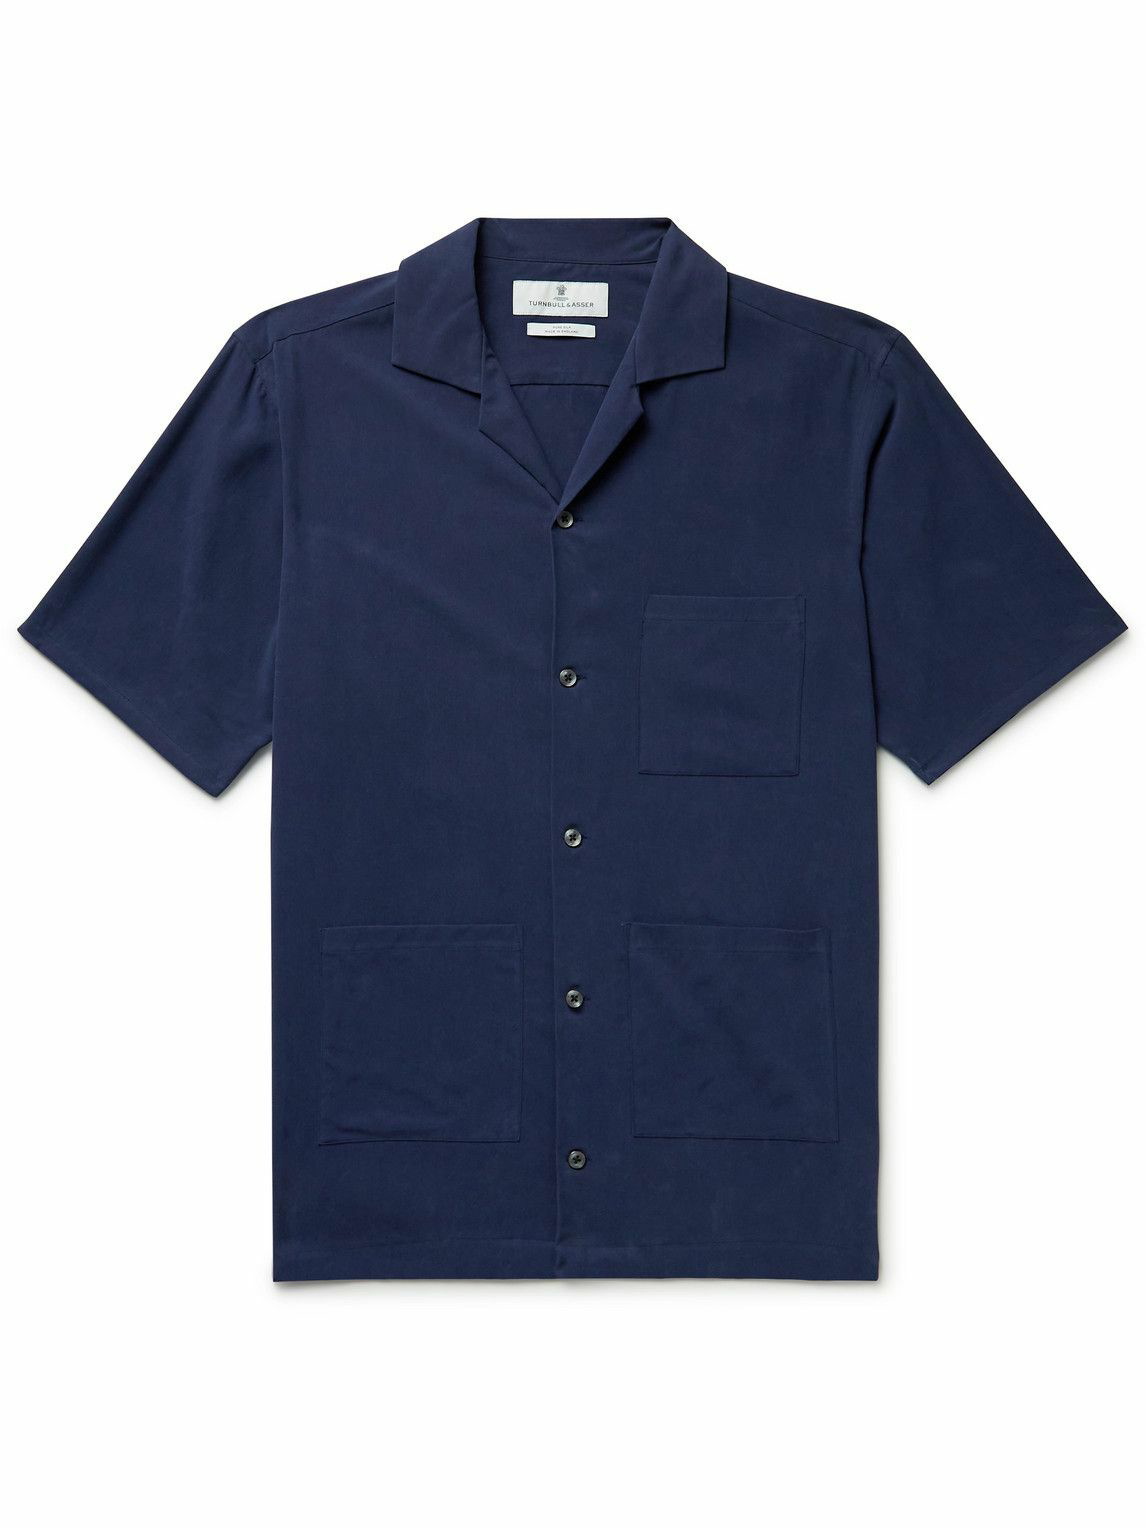 Turnbull & Asser - Phillips Camp-Collar Silk Shirt - Blue Turnbull & Asser